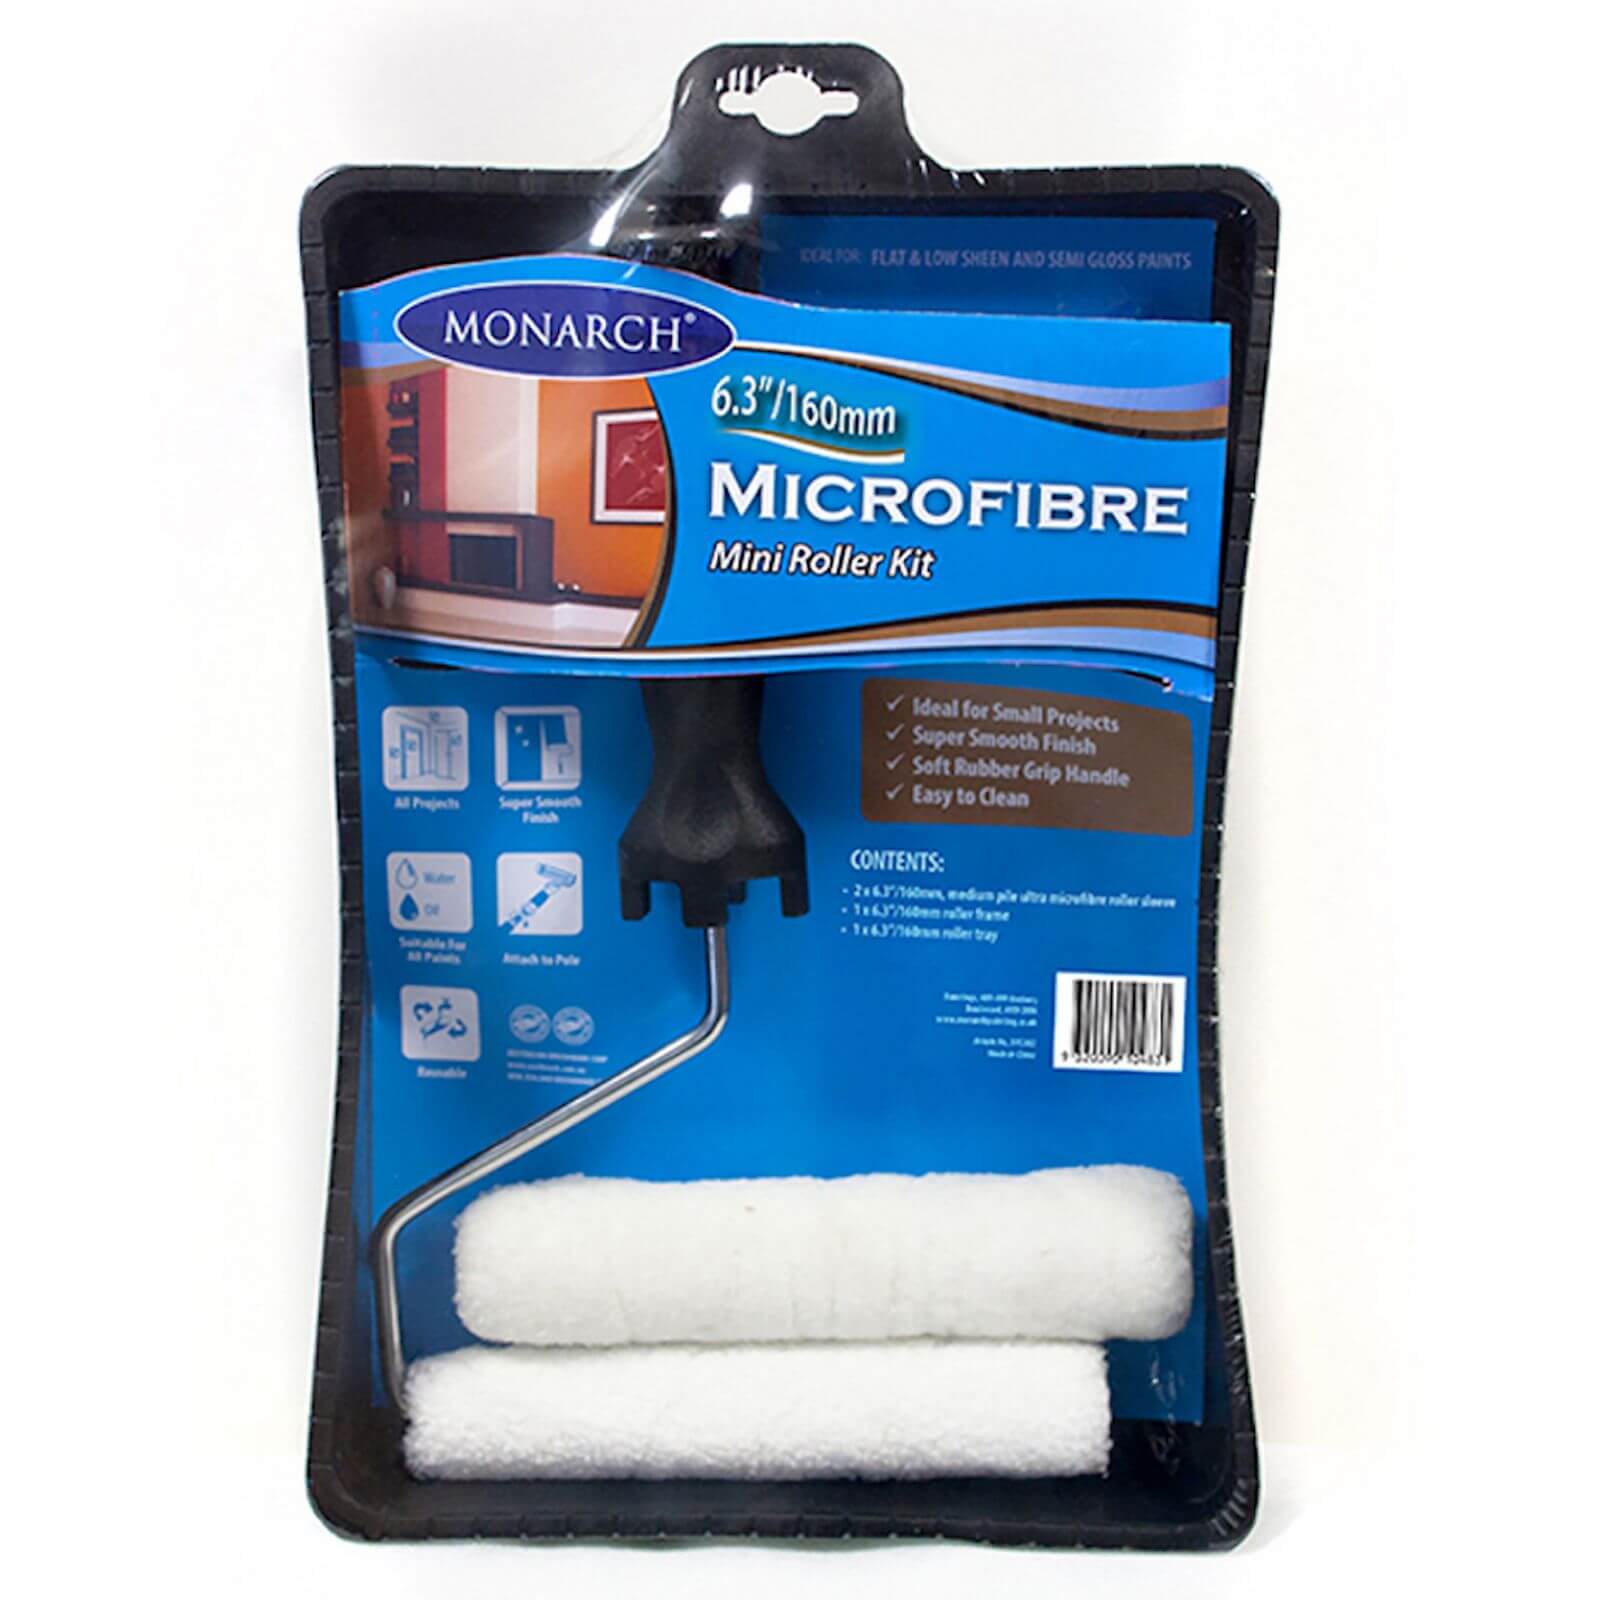 Monarch Roller Kit Microfibre - 160mm